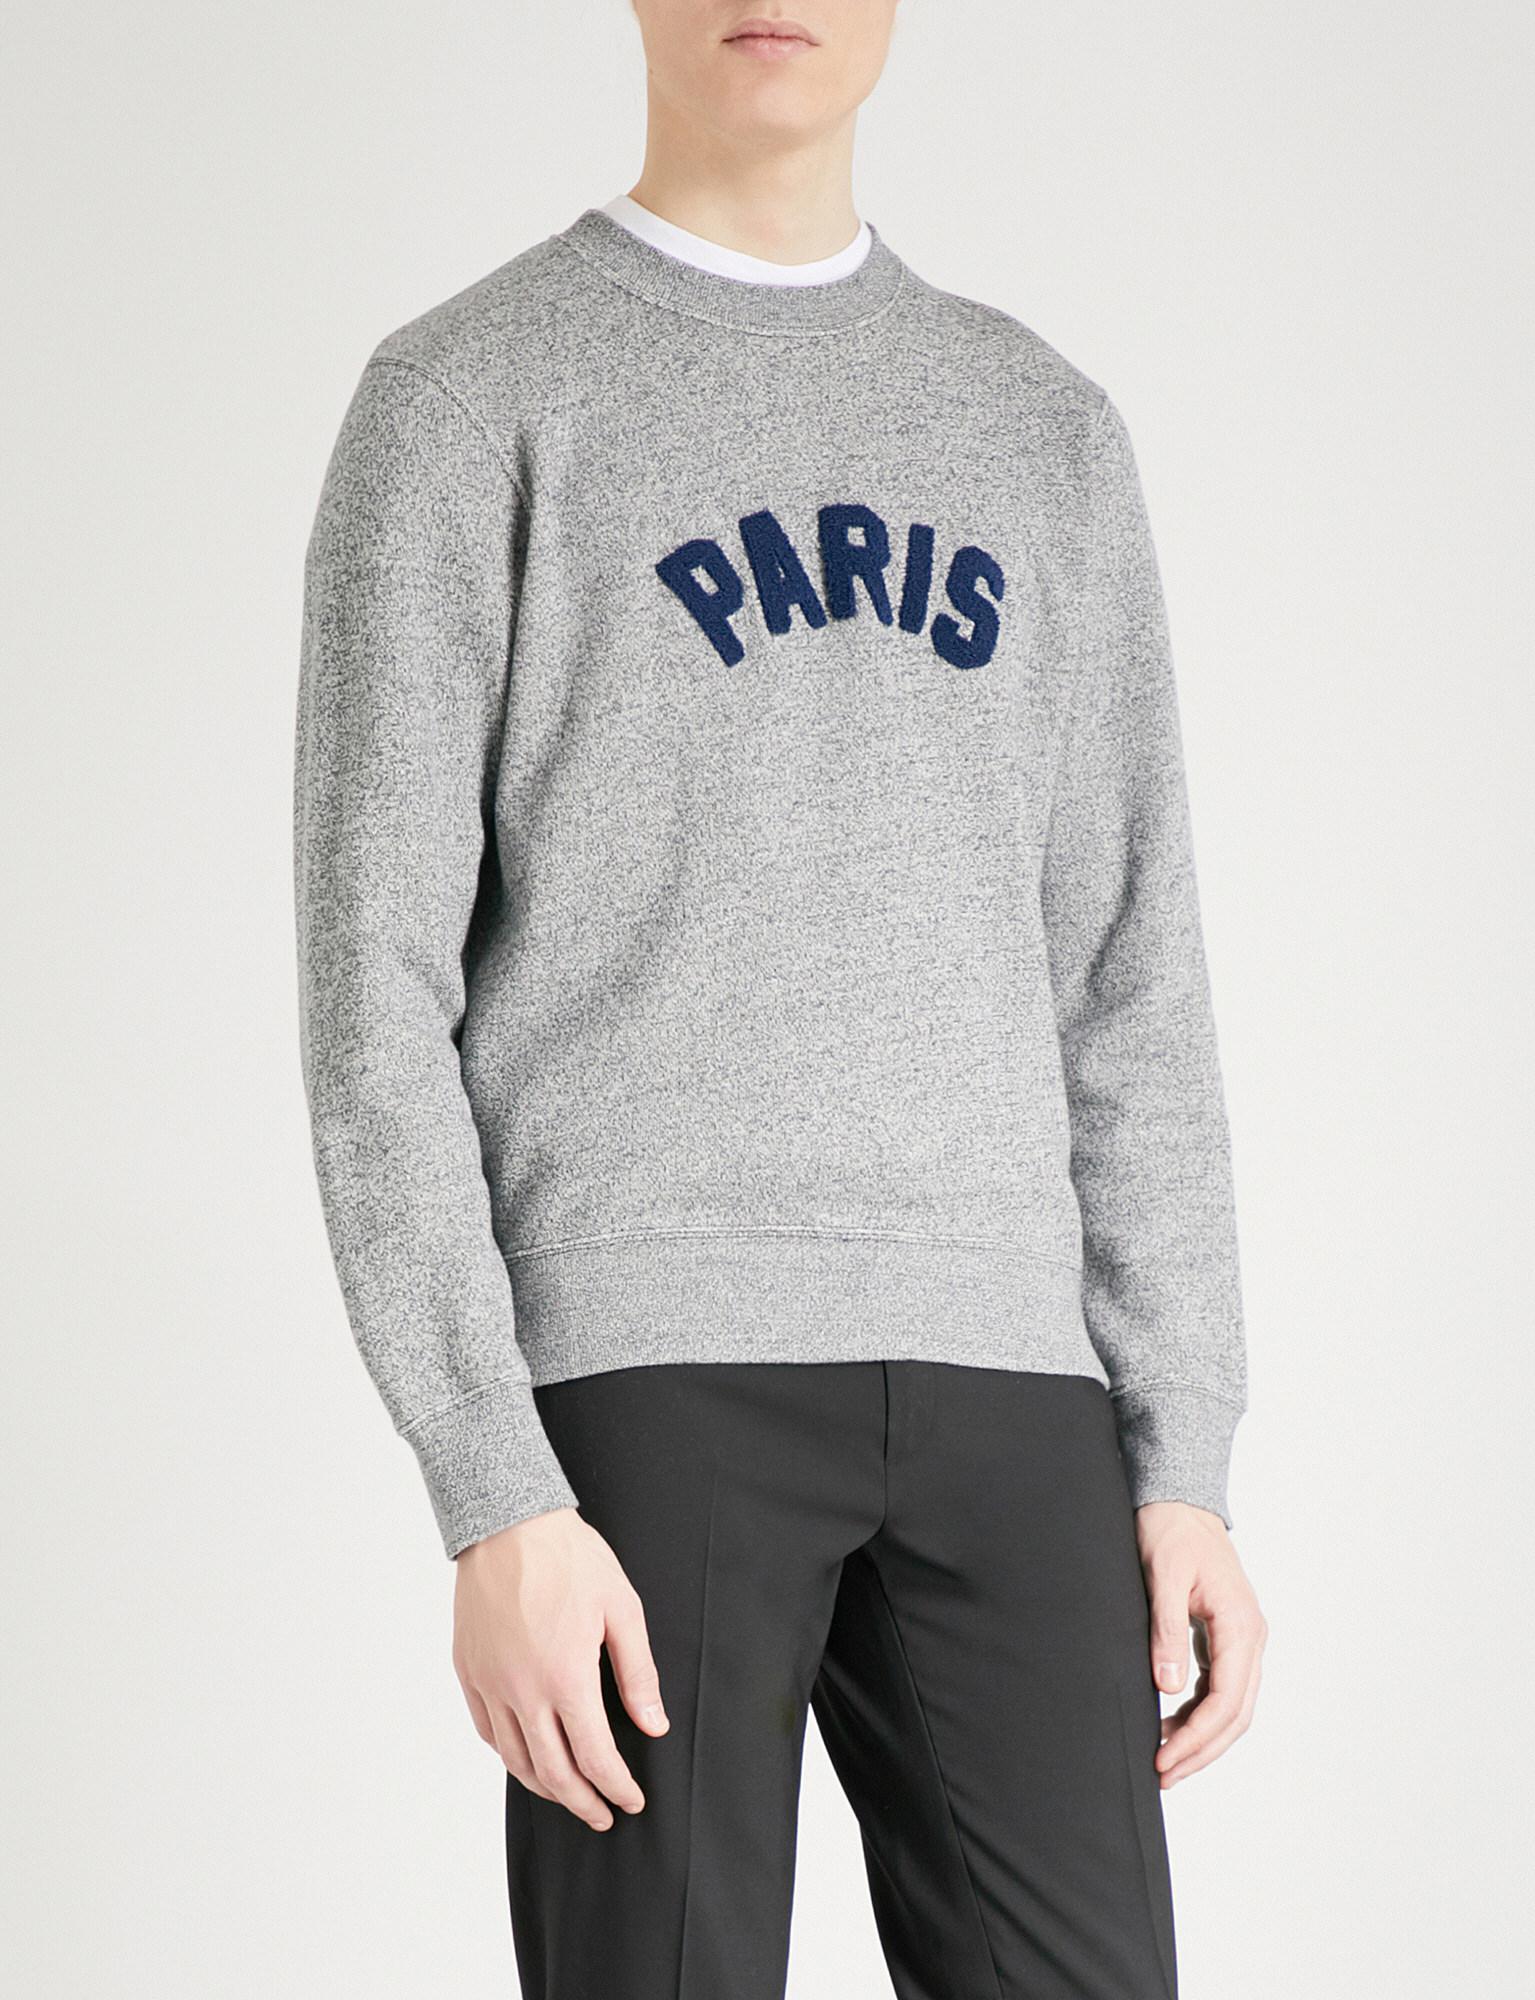 Sandro Paris Cotton-jersey Sweatshirt in Heather Grey (Gray) for Men - Lyst